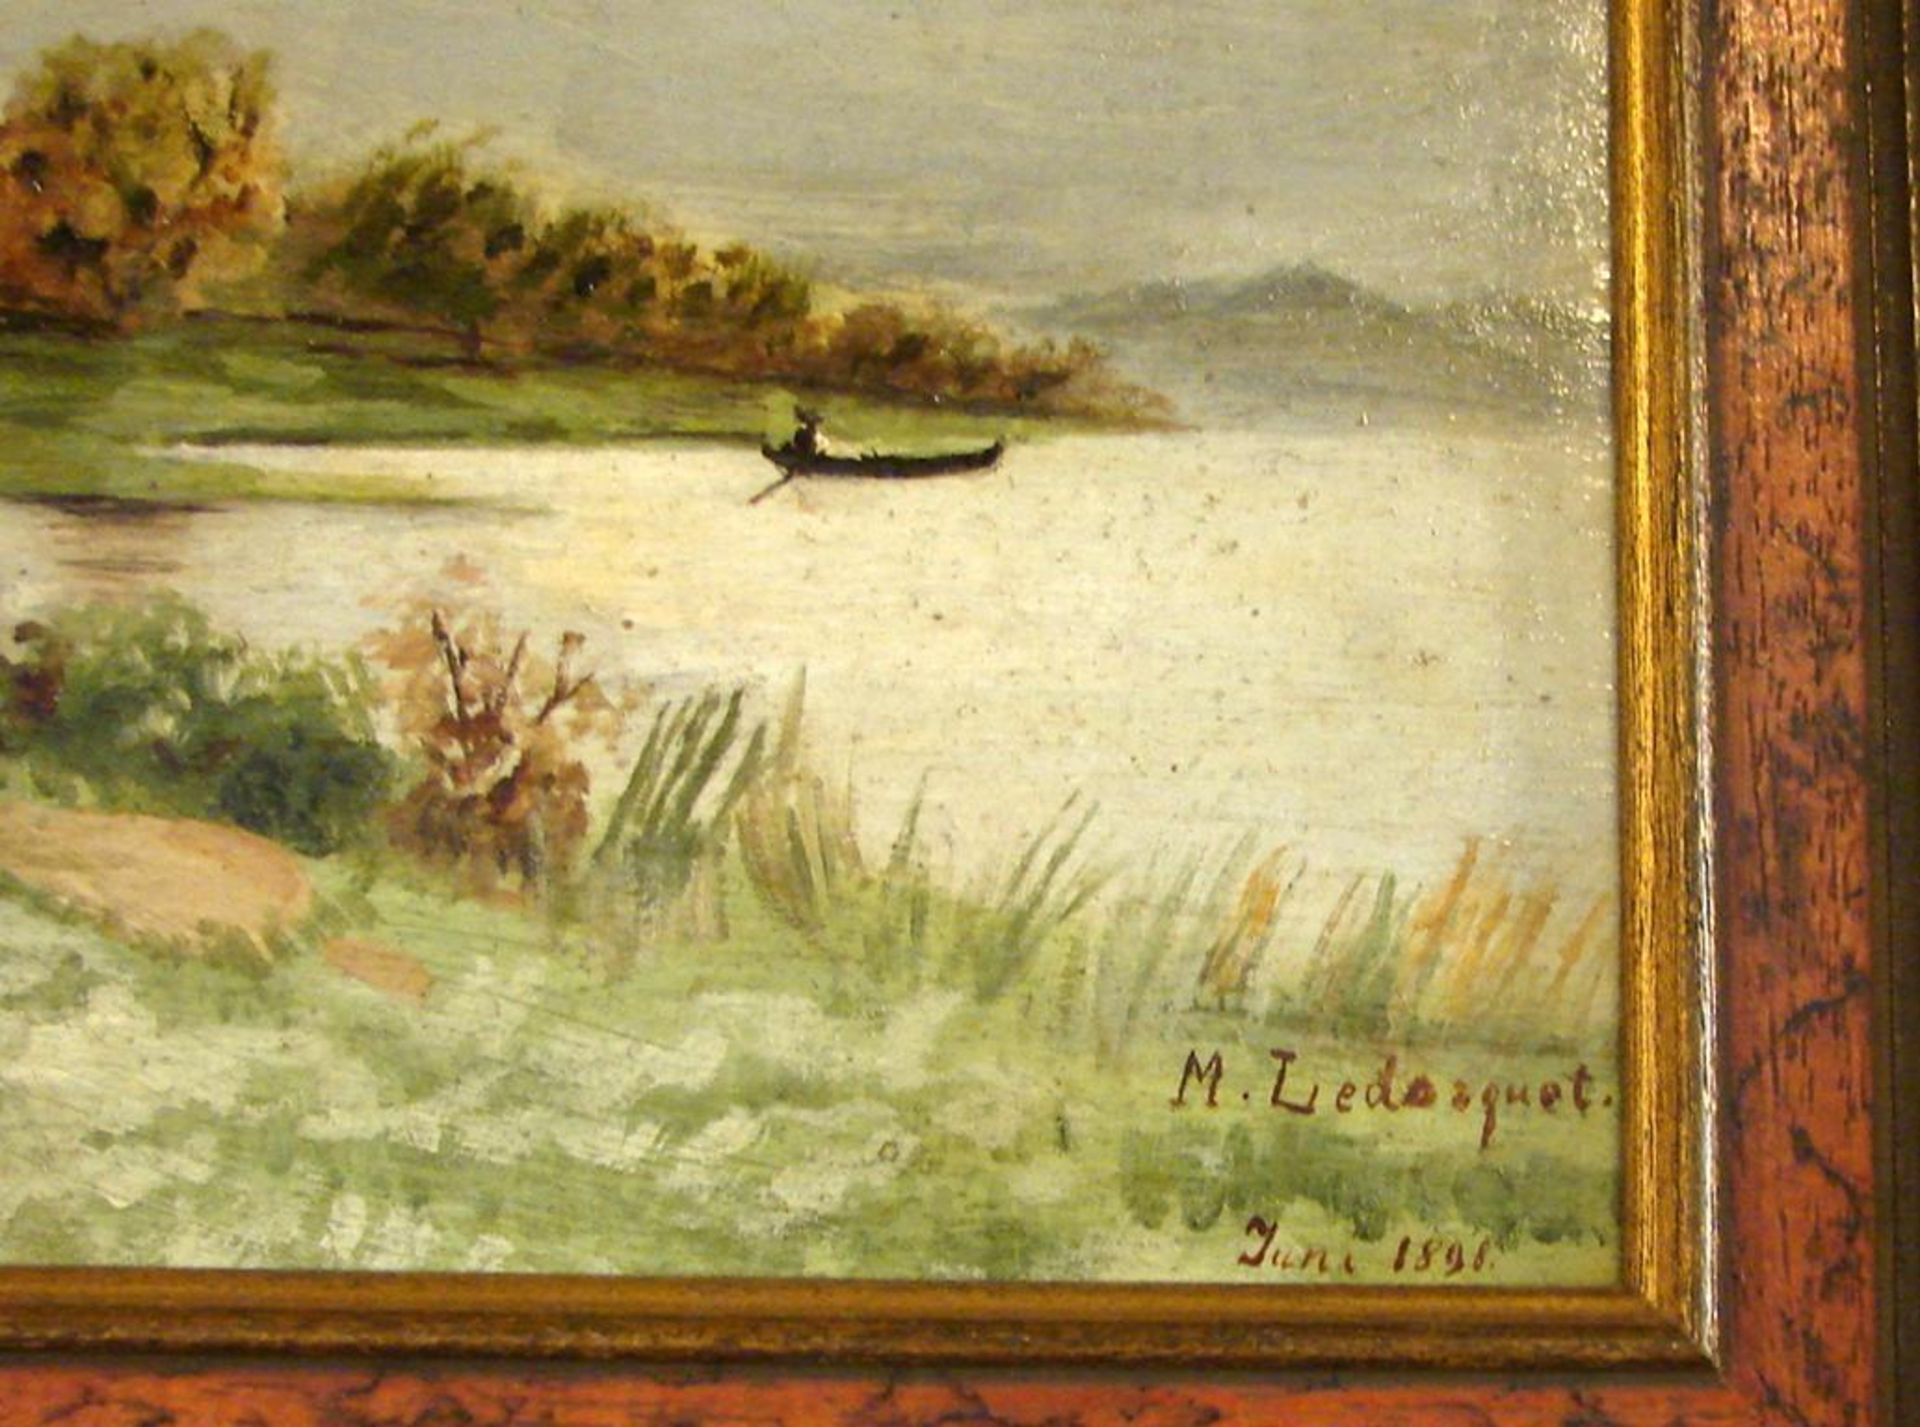 Paar Bilder, "Landschaften", Öl/Hartf., signiert M. LEDOSQUET, datiert 1898, ca. 21 x 36 cm - Image 2 of 2